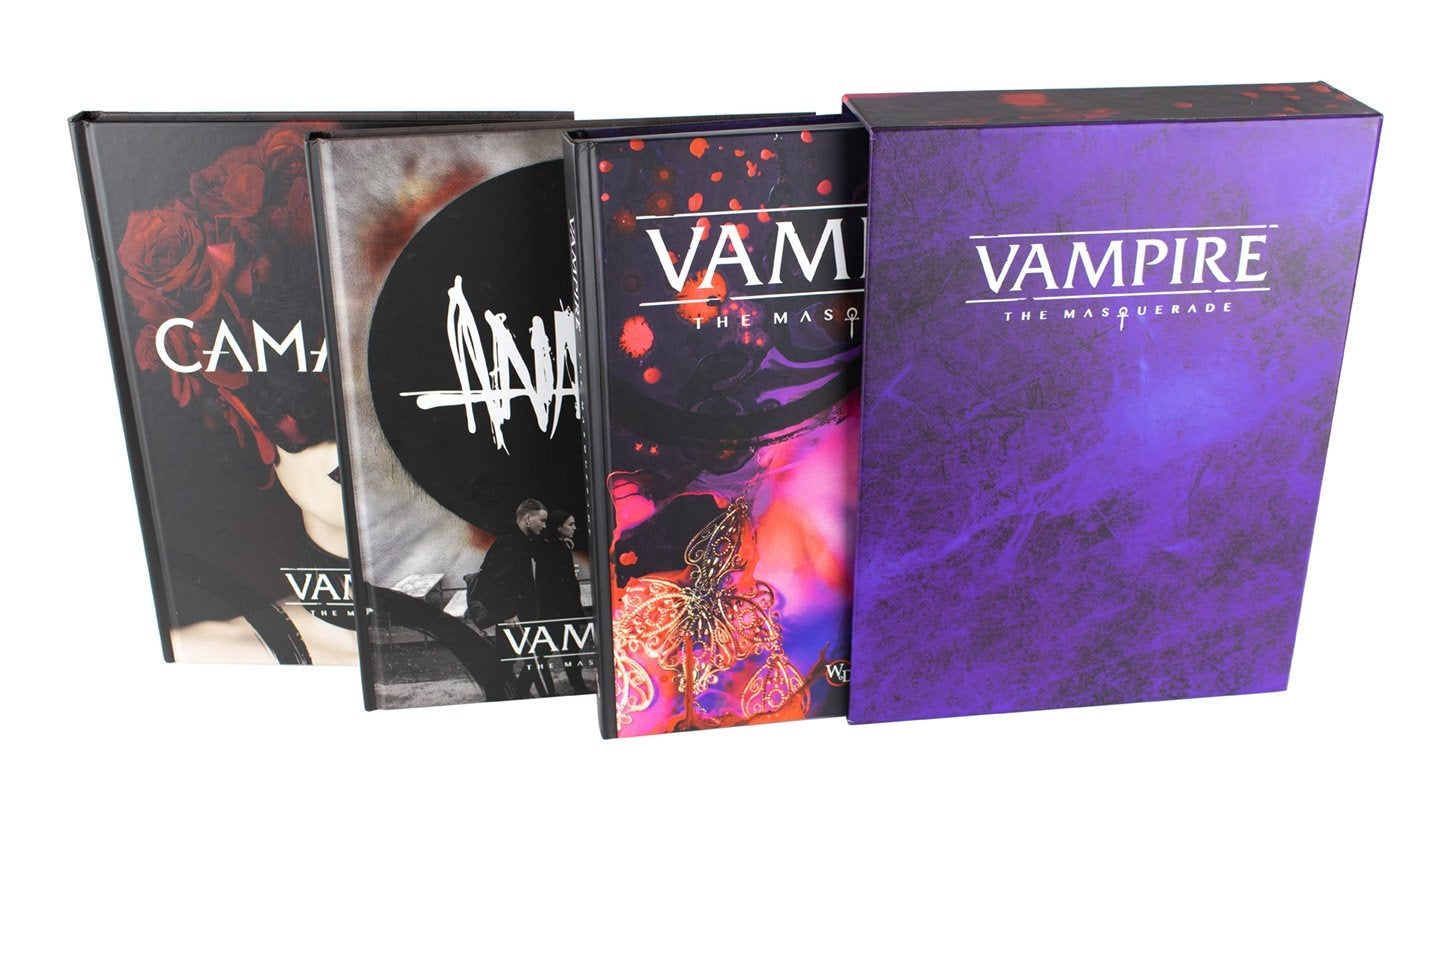 Vampire the Masquerade Slipcase Set (3 Books in Slipcase)